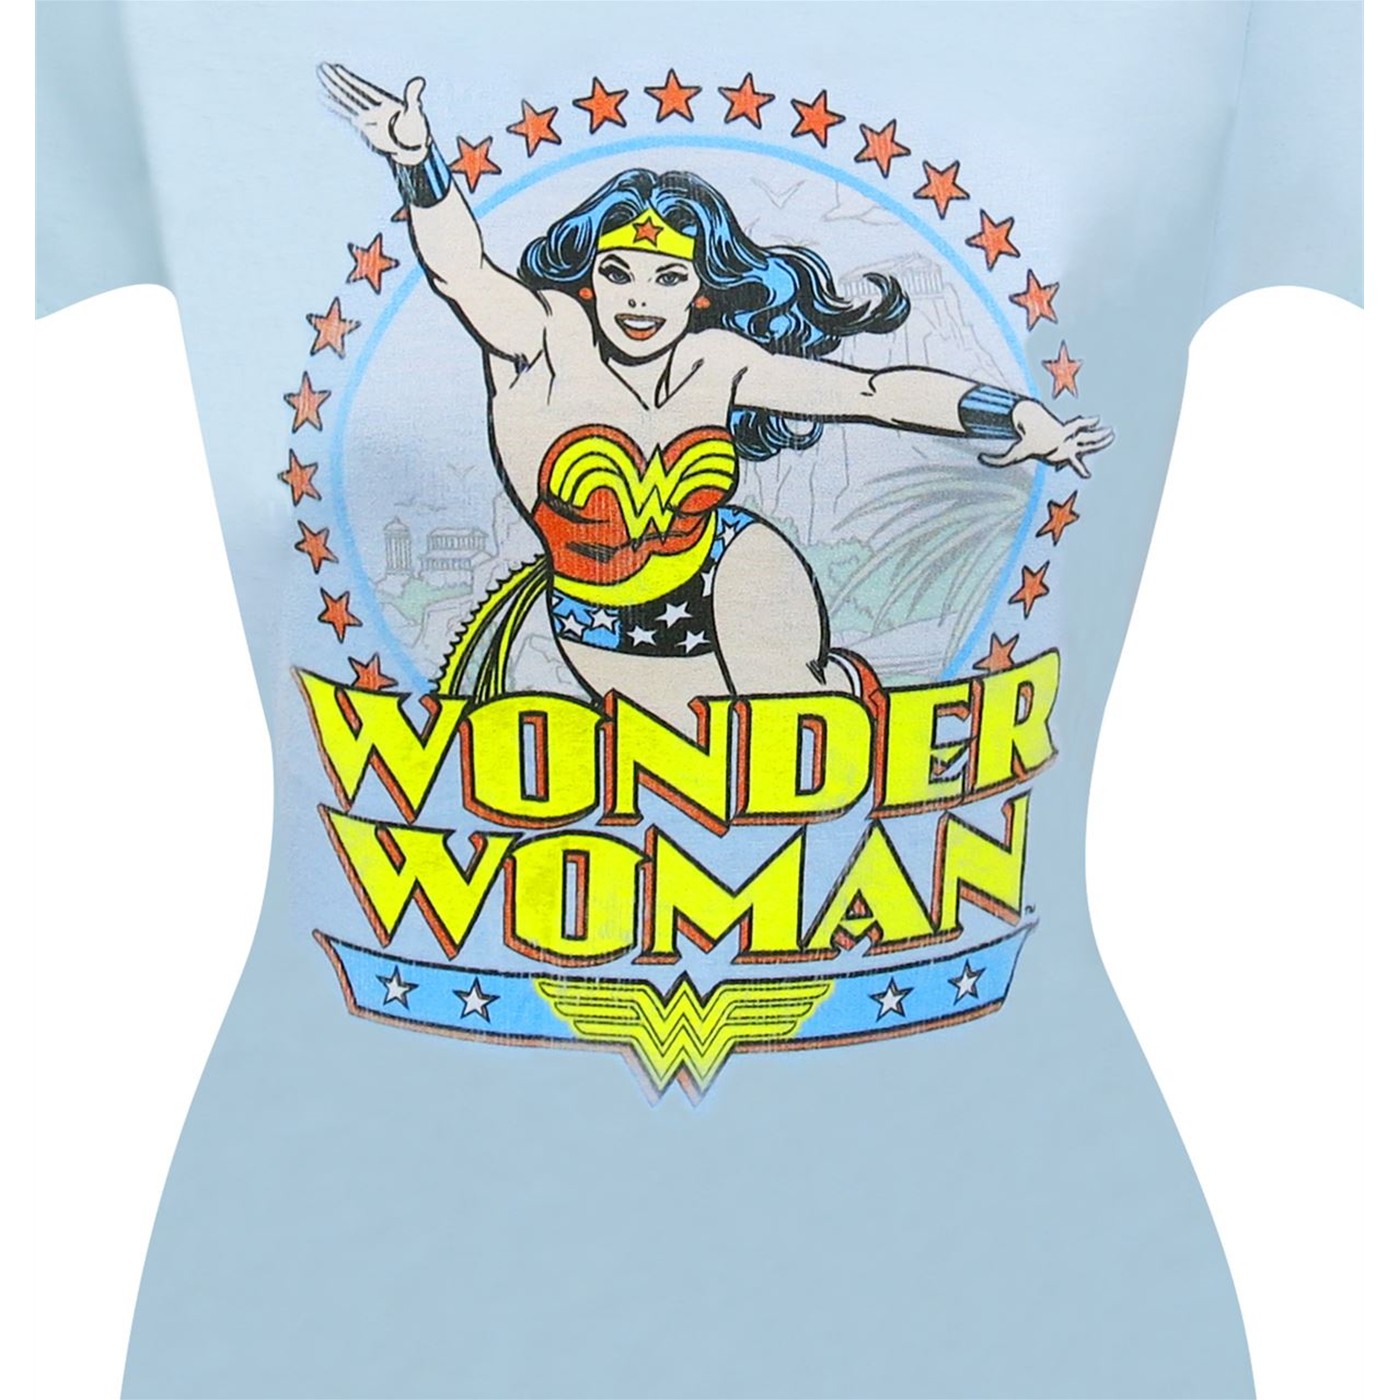 Wonder Woman Blue Distressed Circle Women's T-Shirt